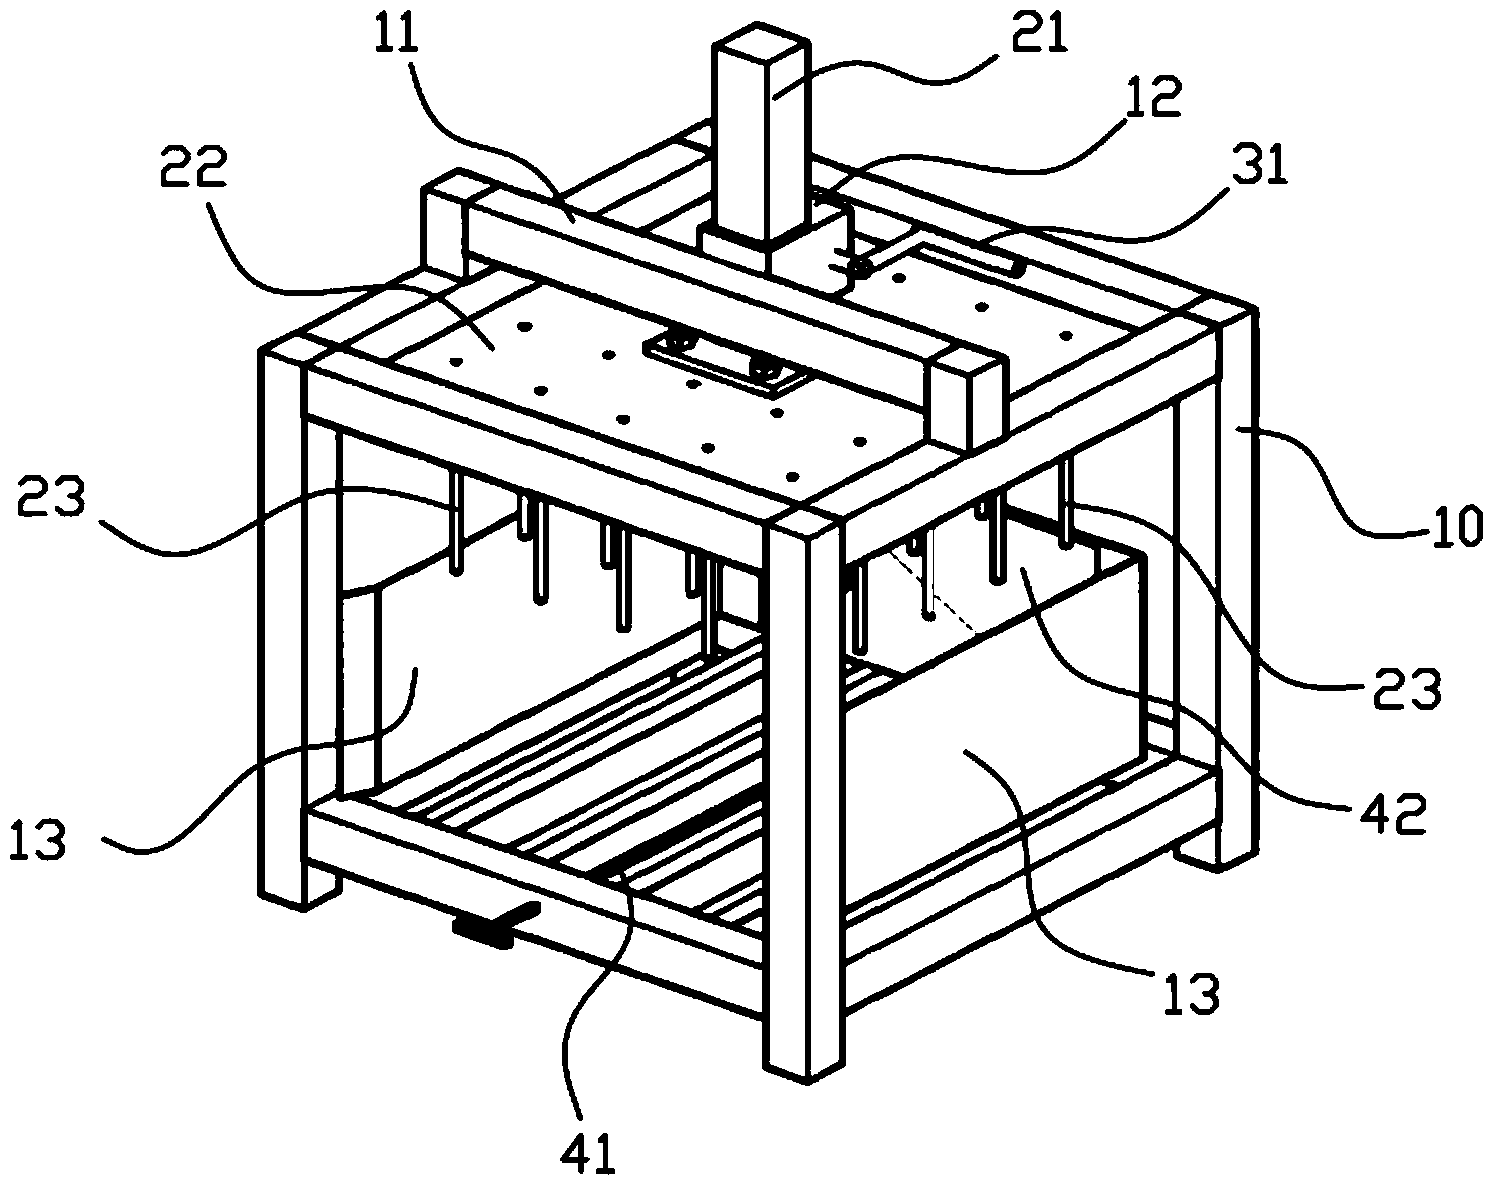 Foam plate perforating machine